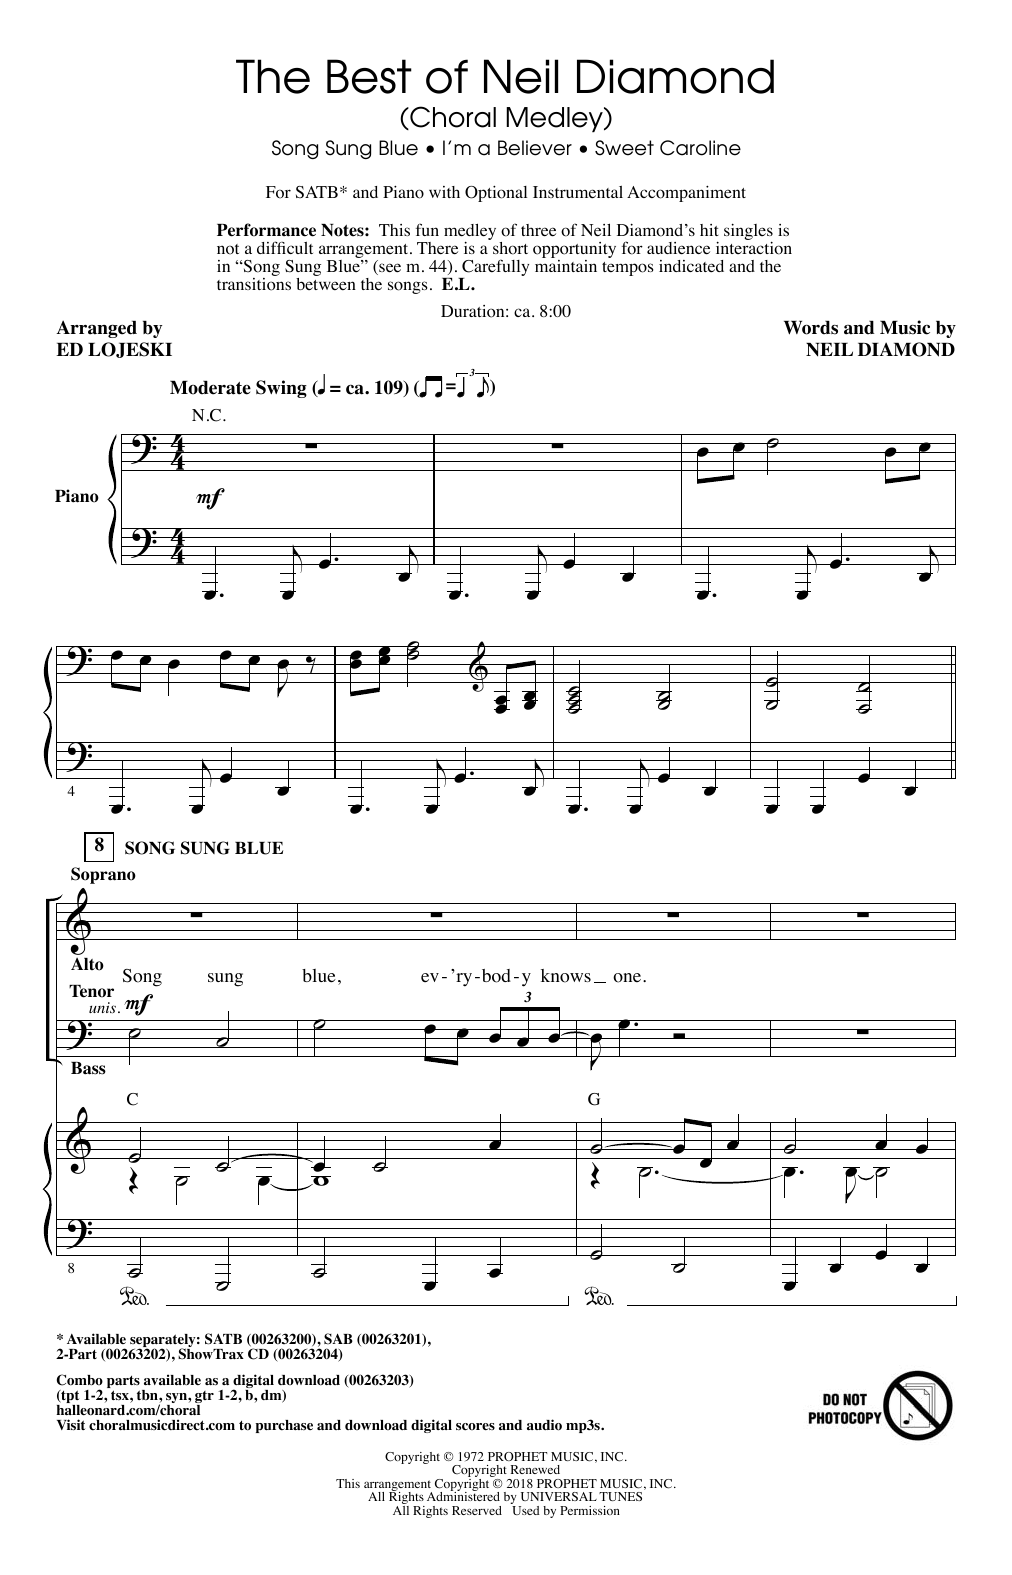 Download Ed Lojeski The Best of Neil Diamond (Choral Medley Sheet Music